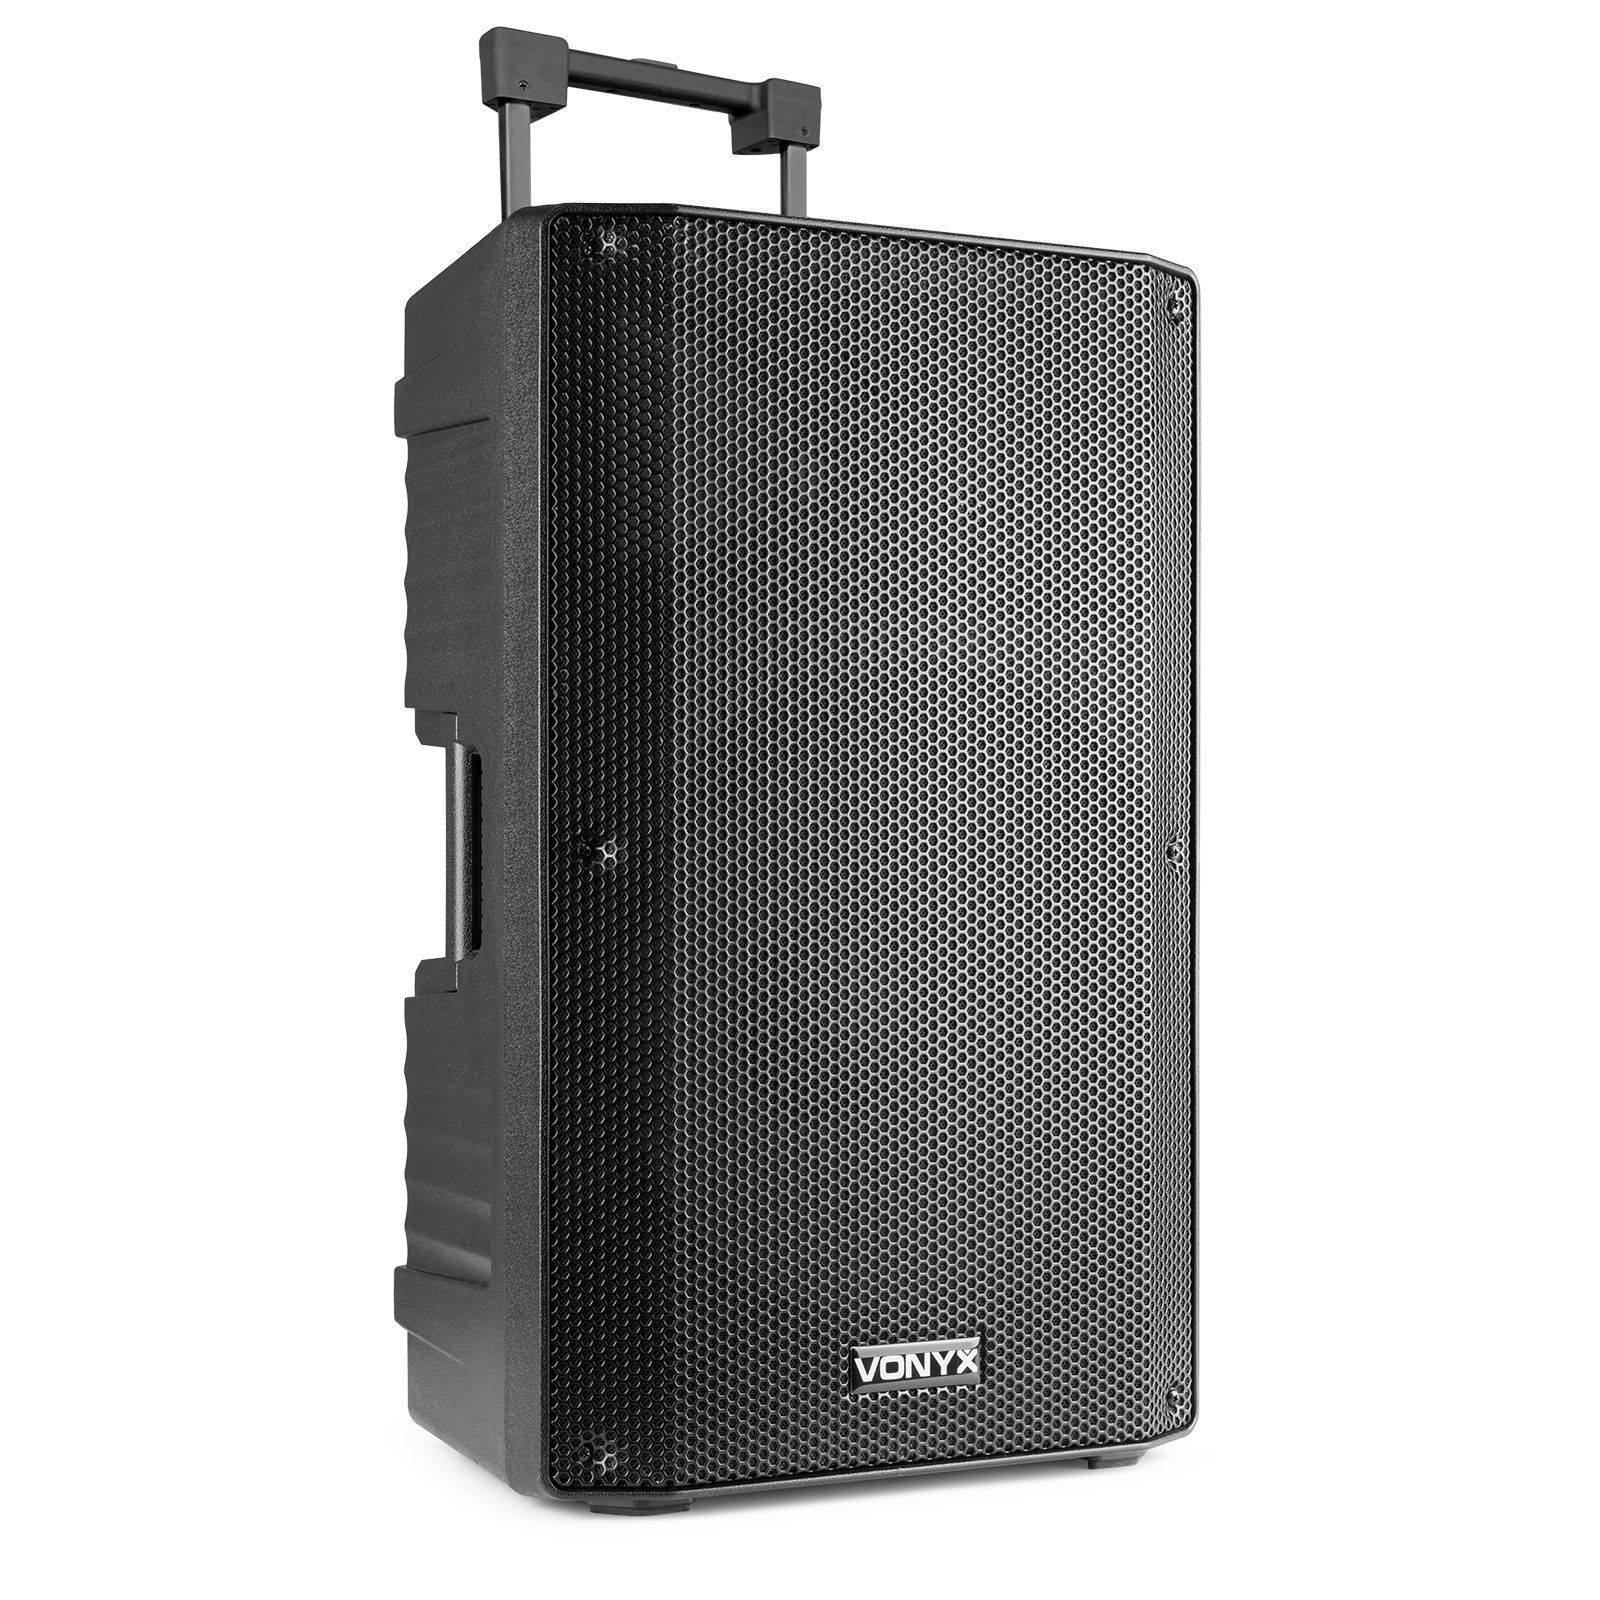 Vonyx VSA500-BP portable speaker met Bluetooth en draadloze microfoon